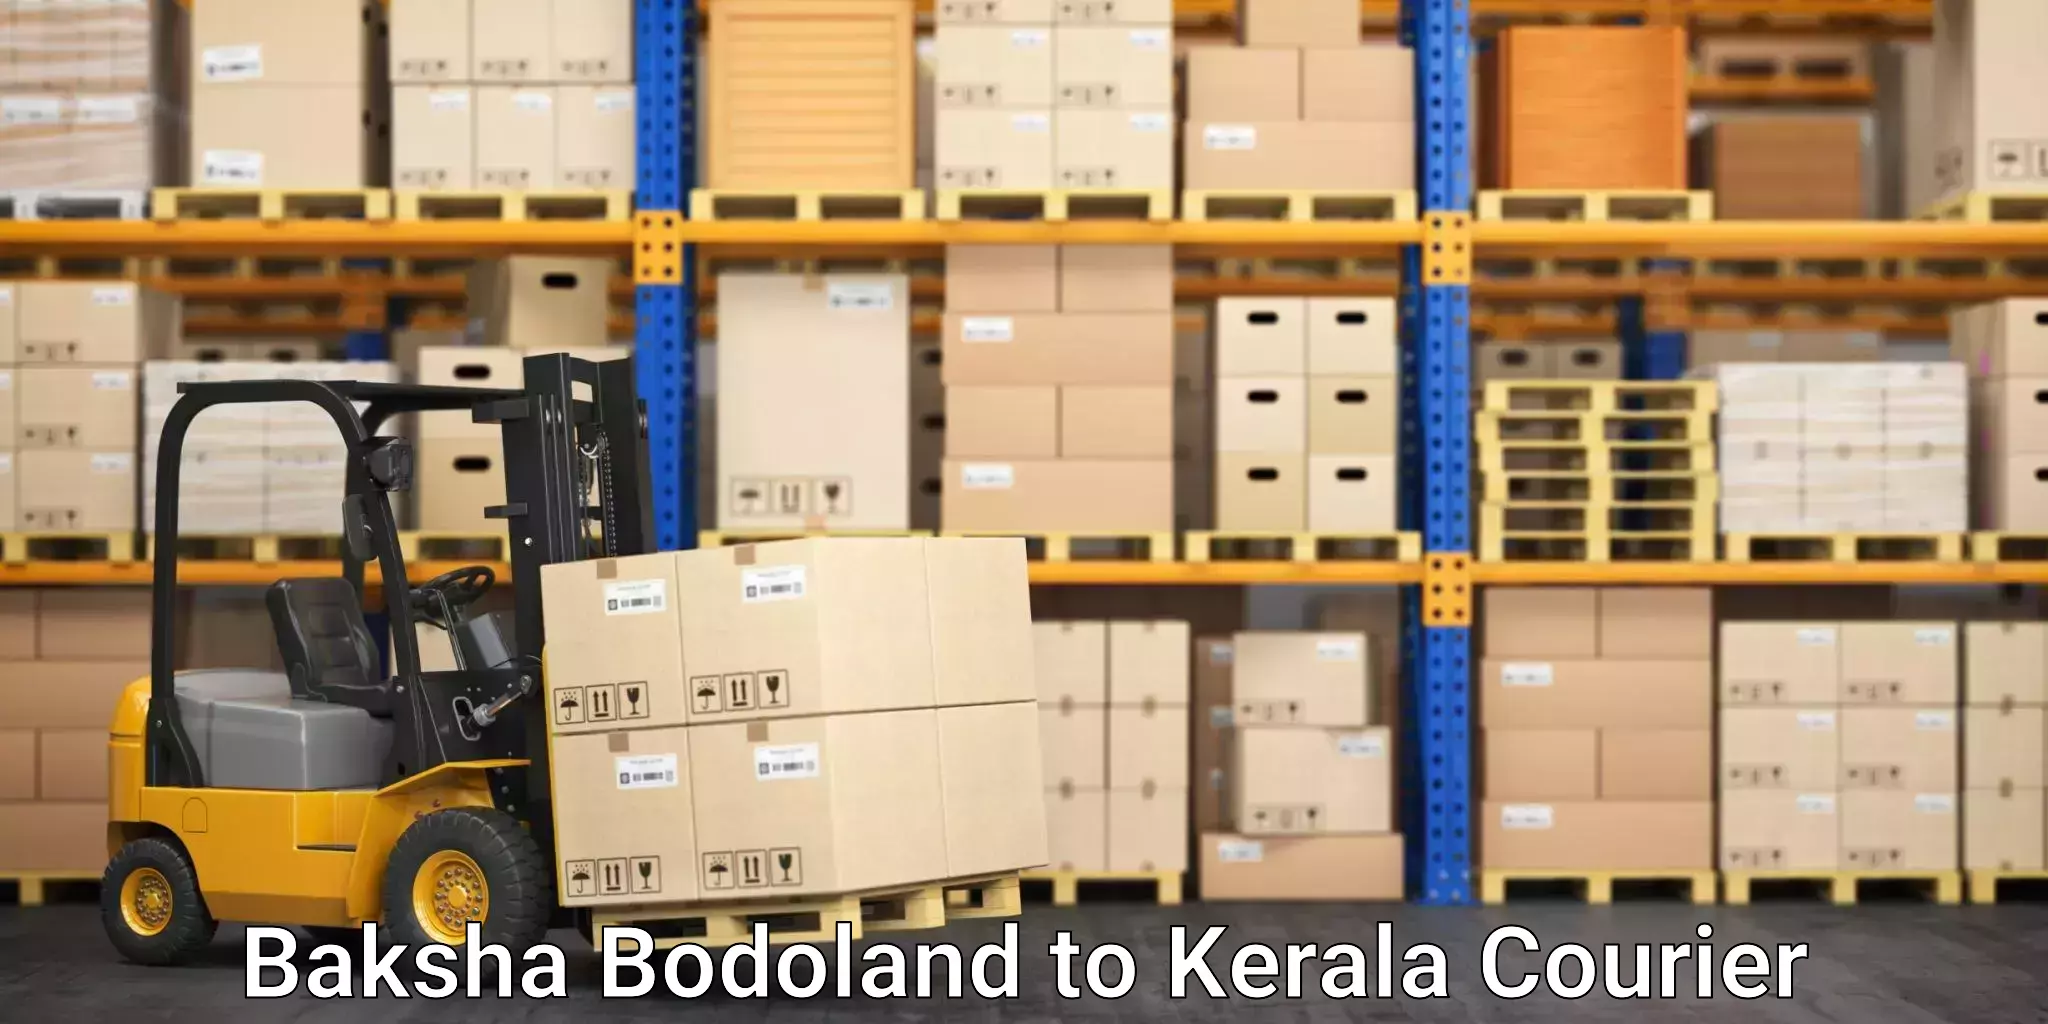 Smart logistics strategies in Baksha Bodoland to Nuchiyad